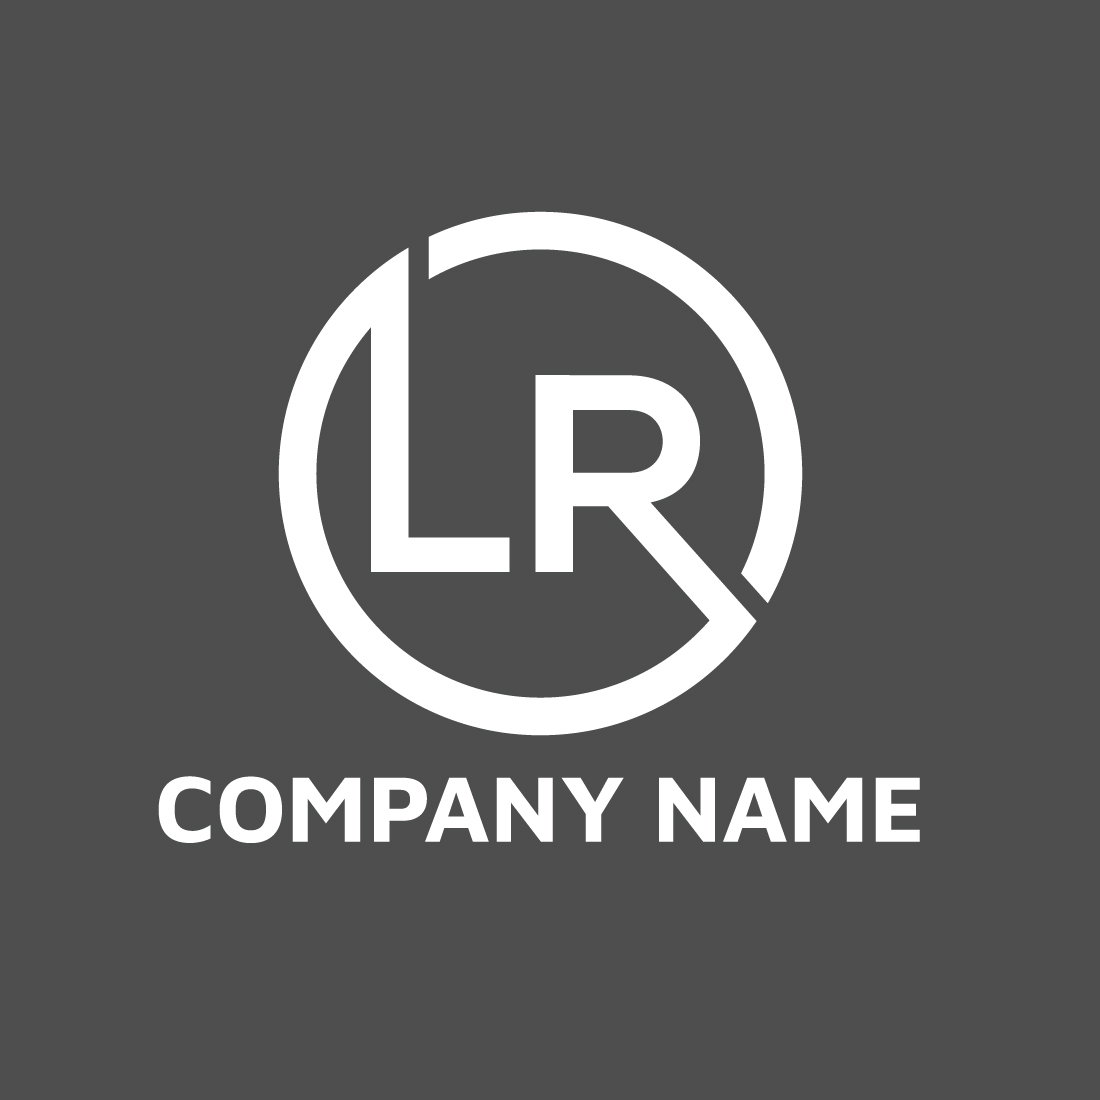 LR Monogram letter logo template design preview image.